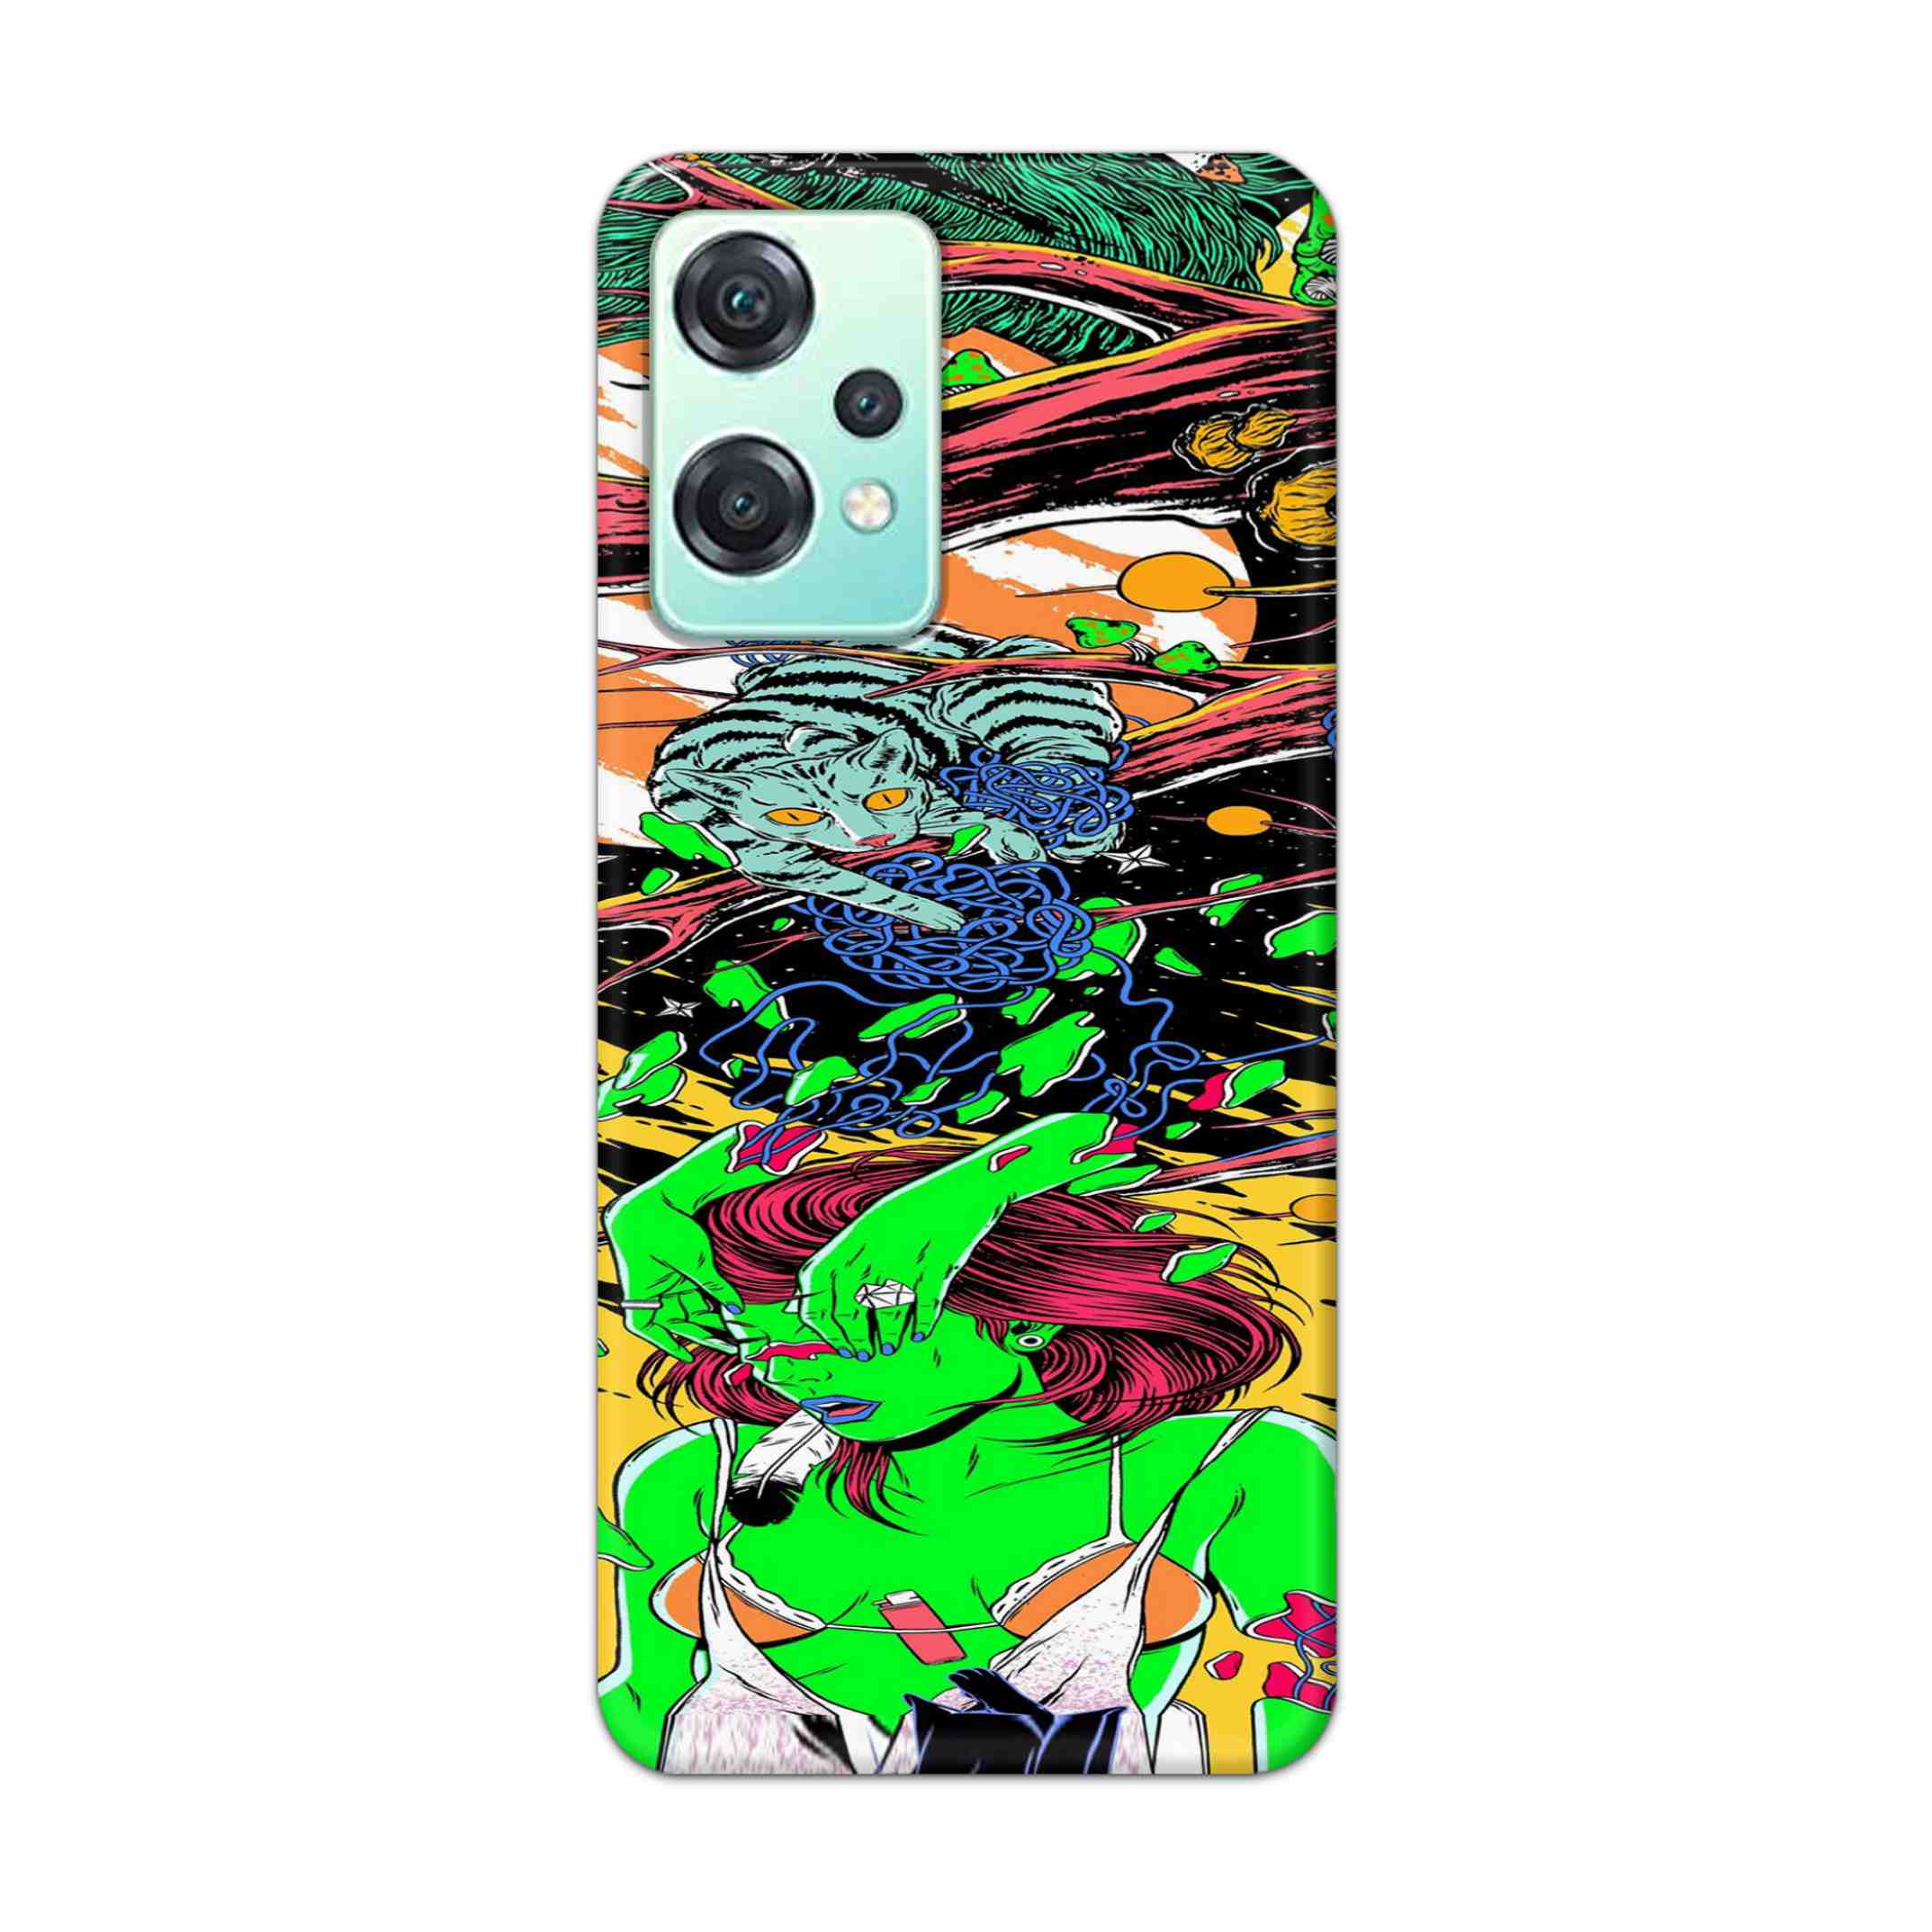 Buy Green Girl Art Hard Back Mobile Phone Case Cover For OnePlus Nord CE 2 Lite 5G Online